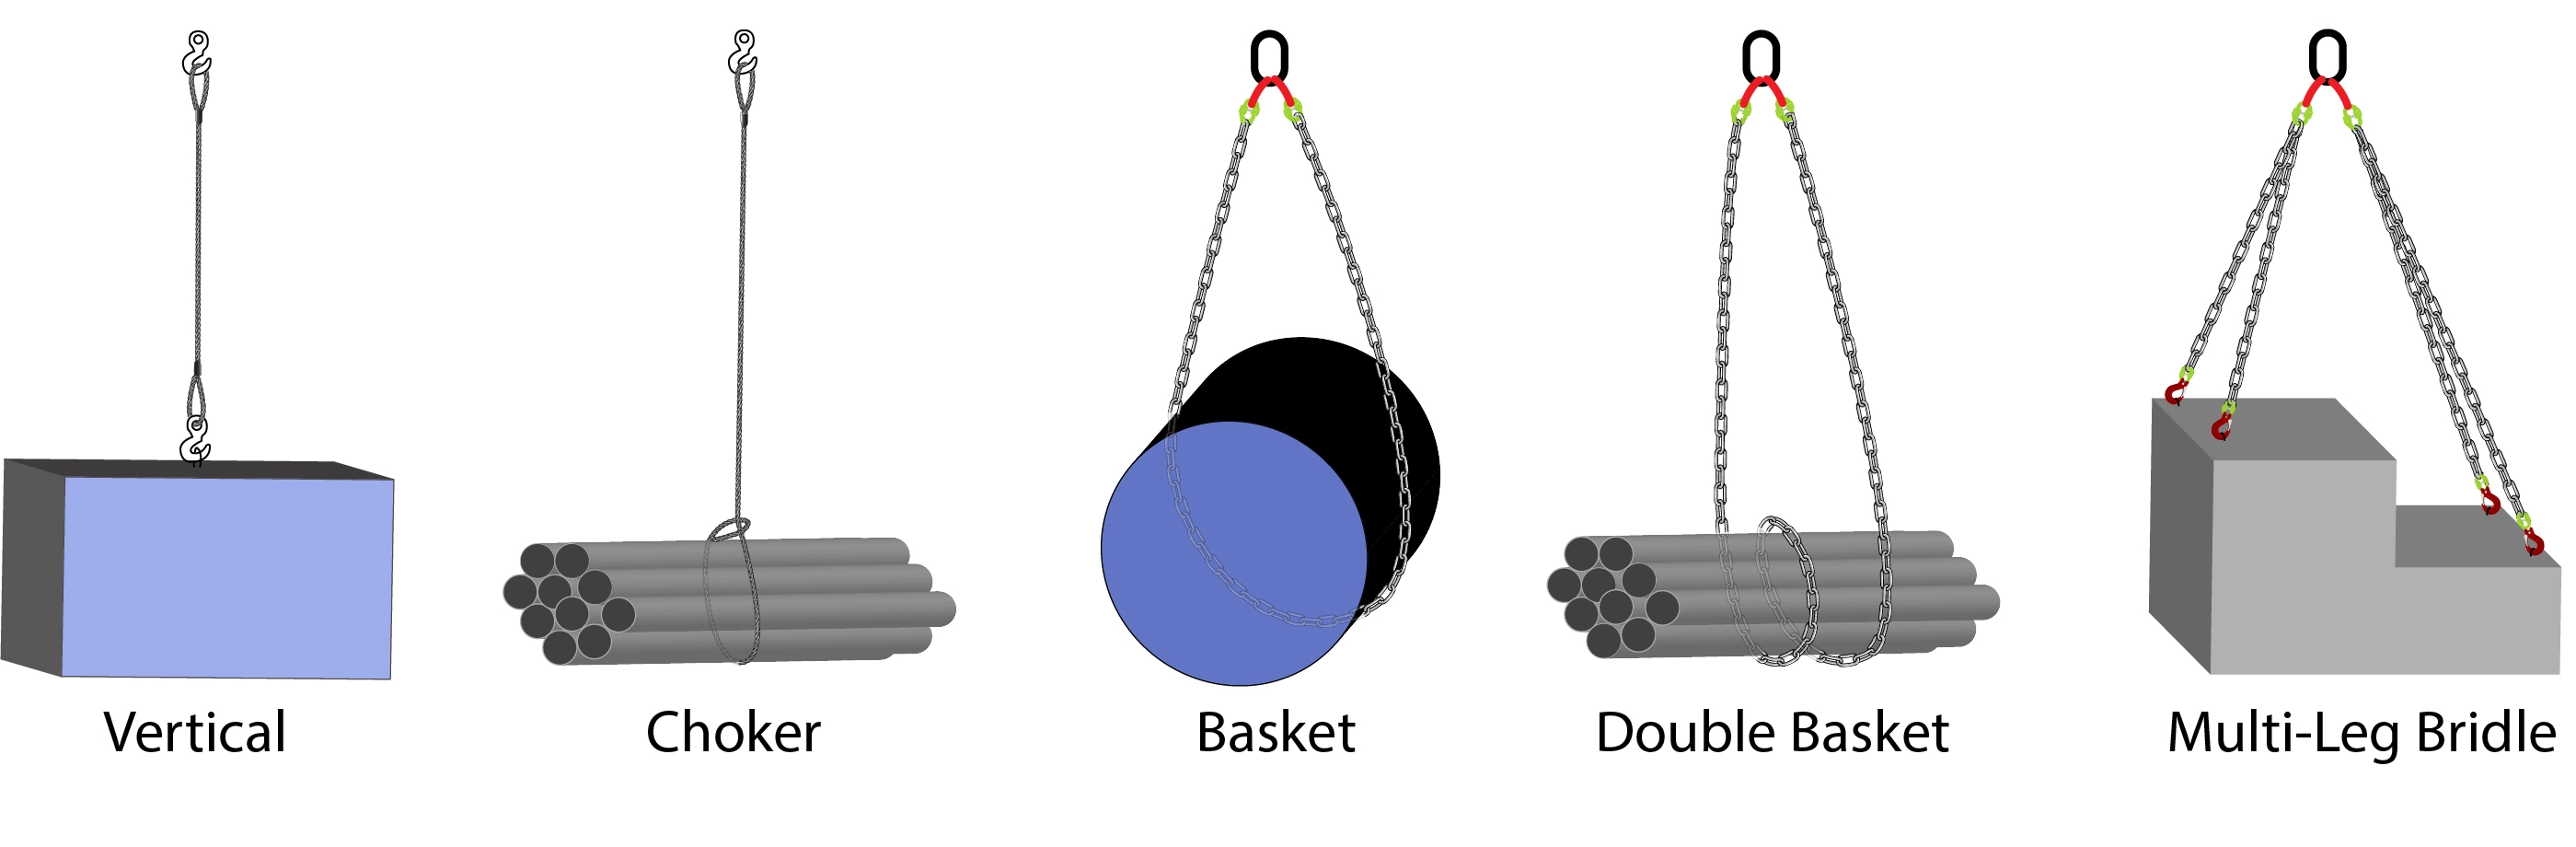 visual representation of a vertical hitch, choker hitch, basket hitch, double basket hitch, and multi-leg bridle assemblies